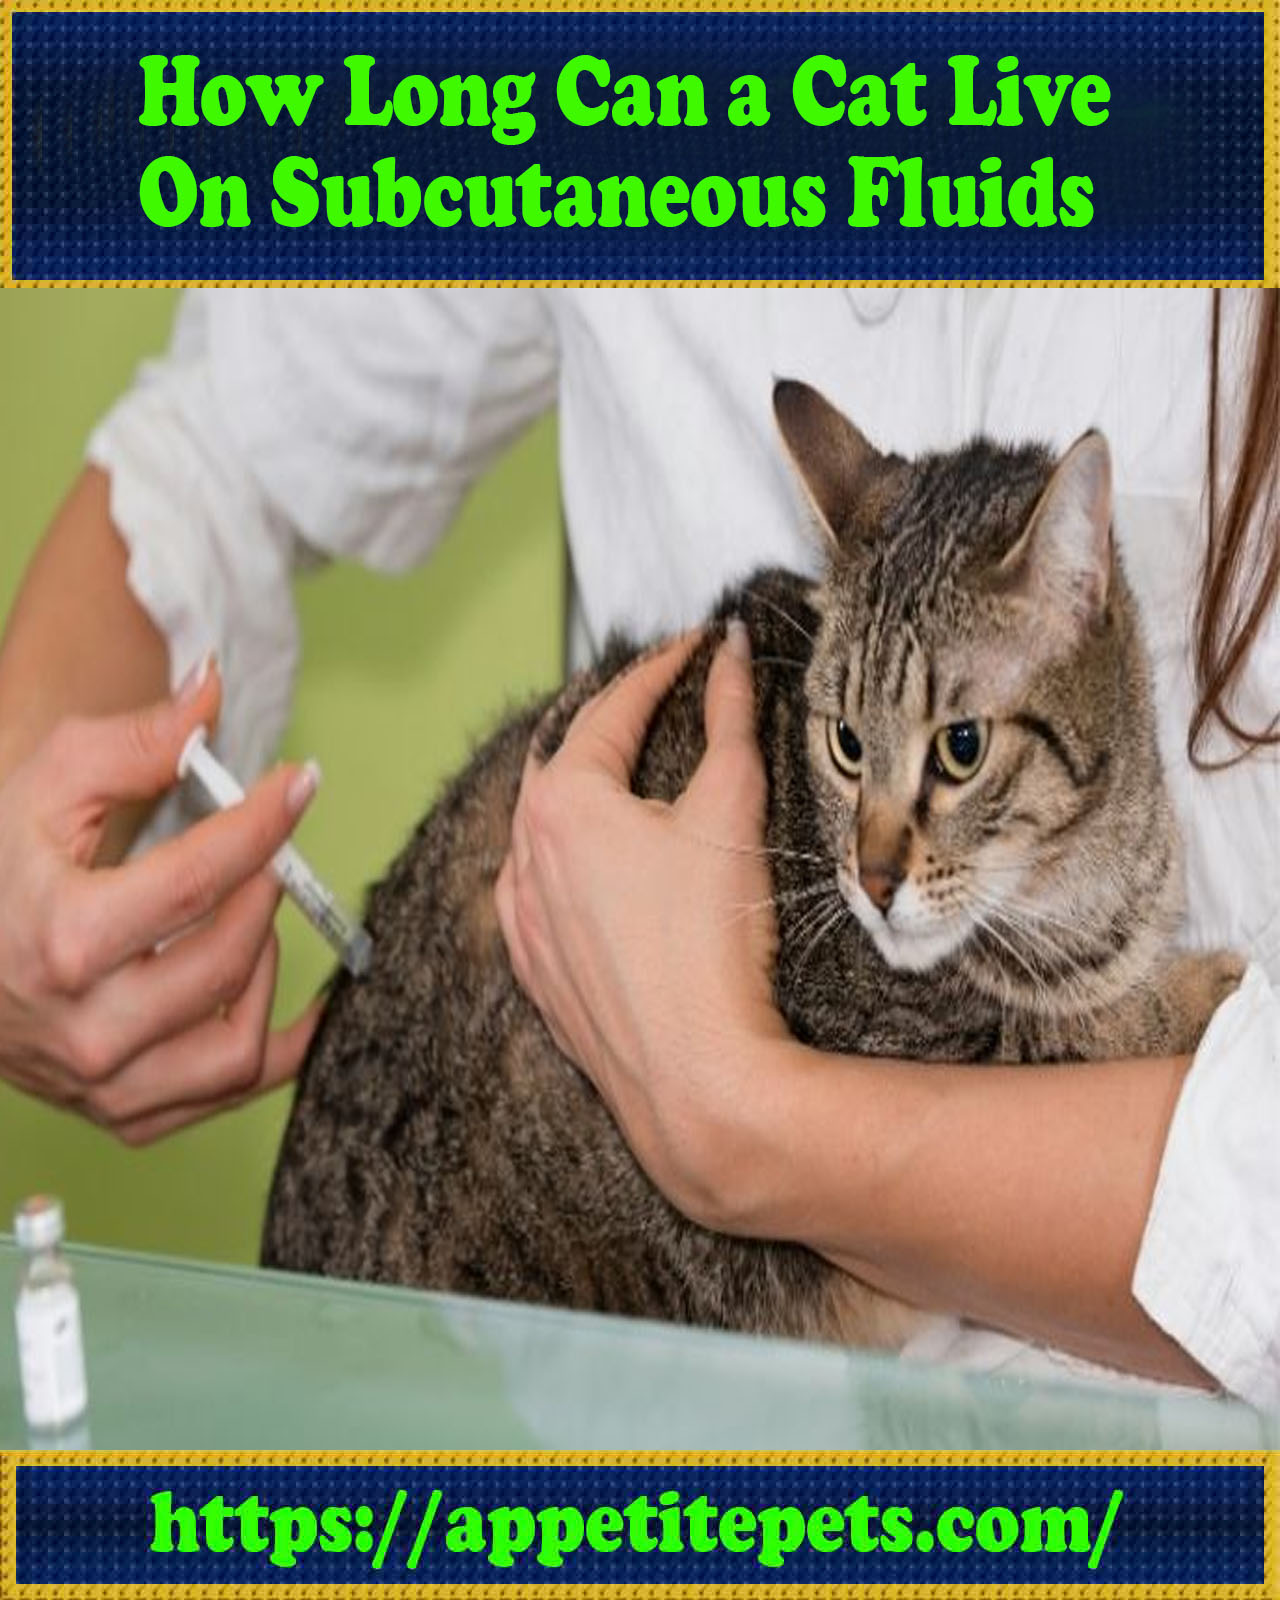 How Long Can a Cat Live on Subcutaneous Fluids